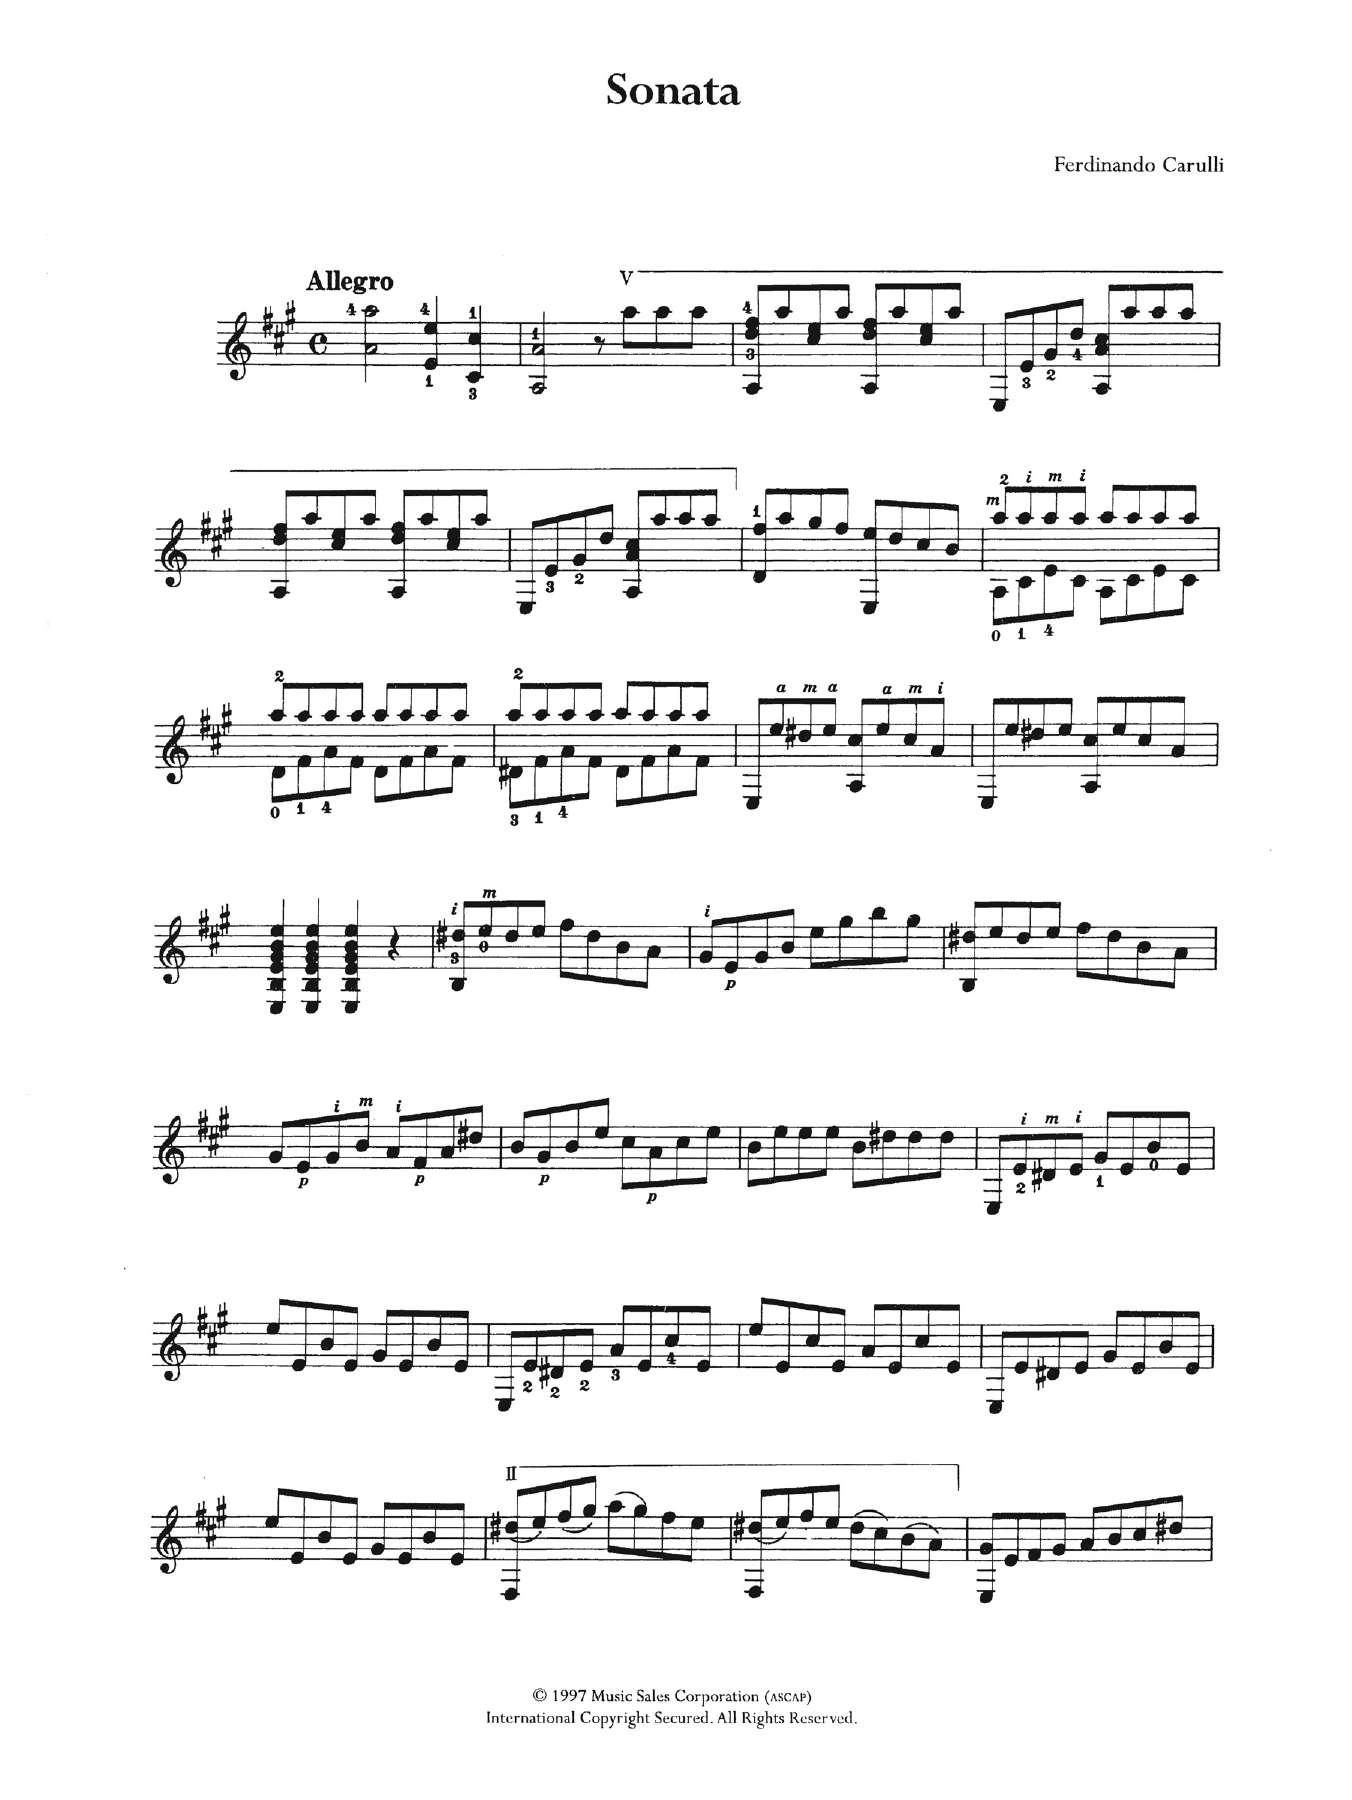 Ferdinando Carulli Sonata Sheet Music Notes & Chords for Guitar - Download or Print PDF